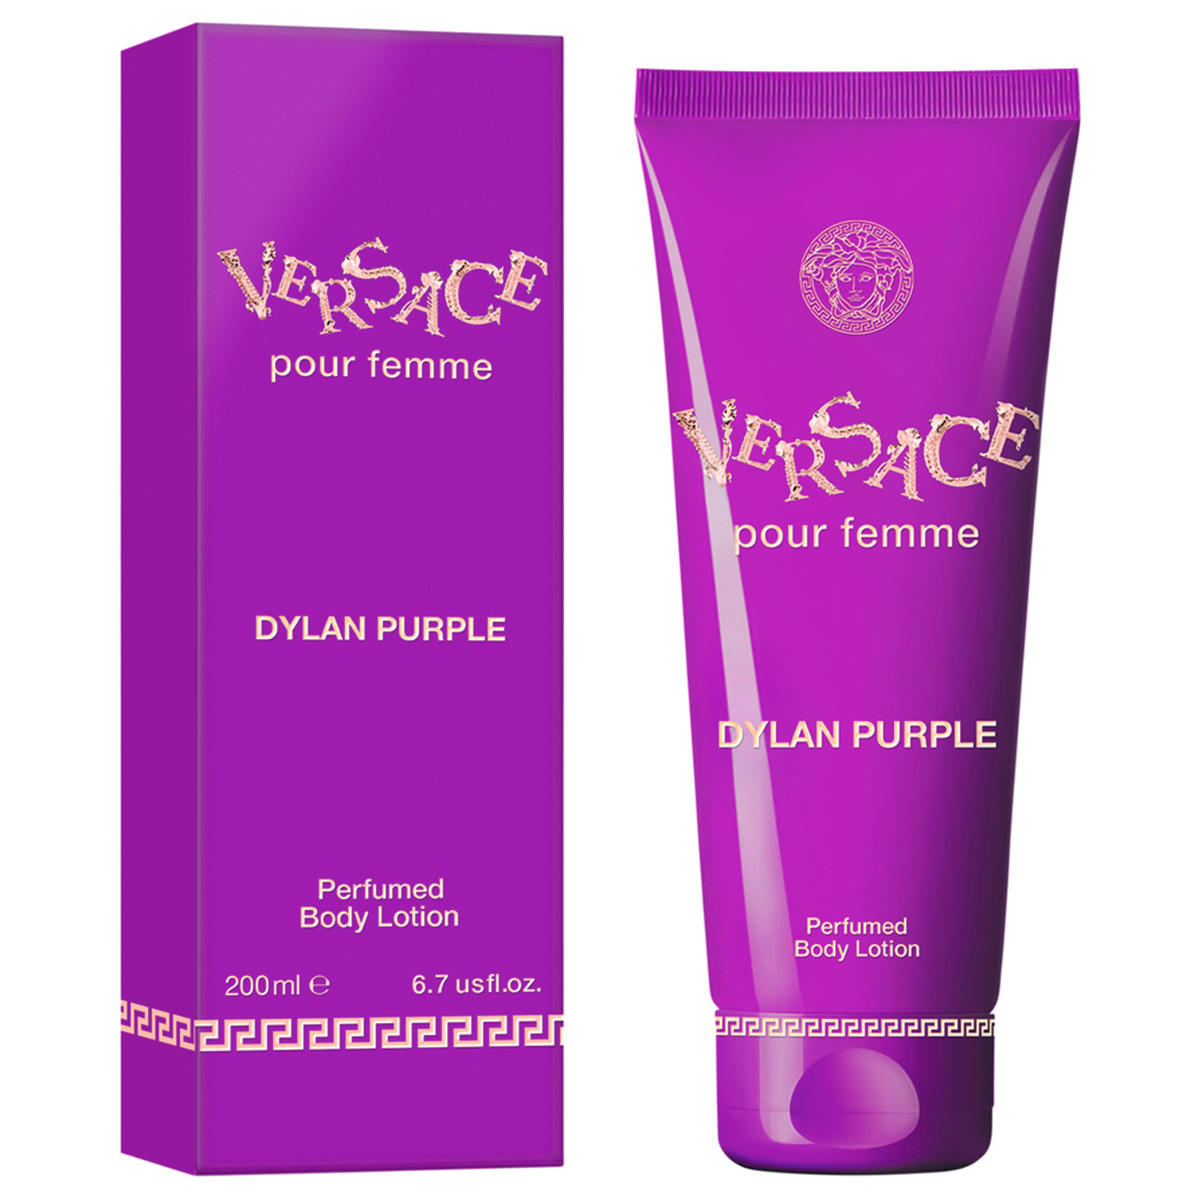 Versace Dylan Purple Perfumed Body Lotion 200 ml - 2